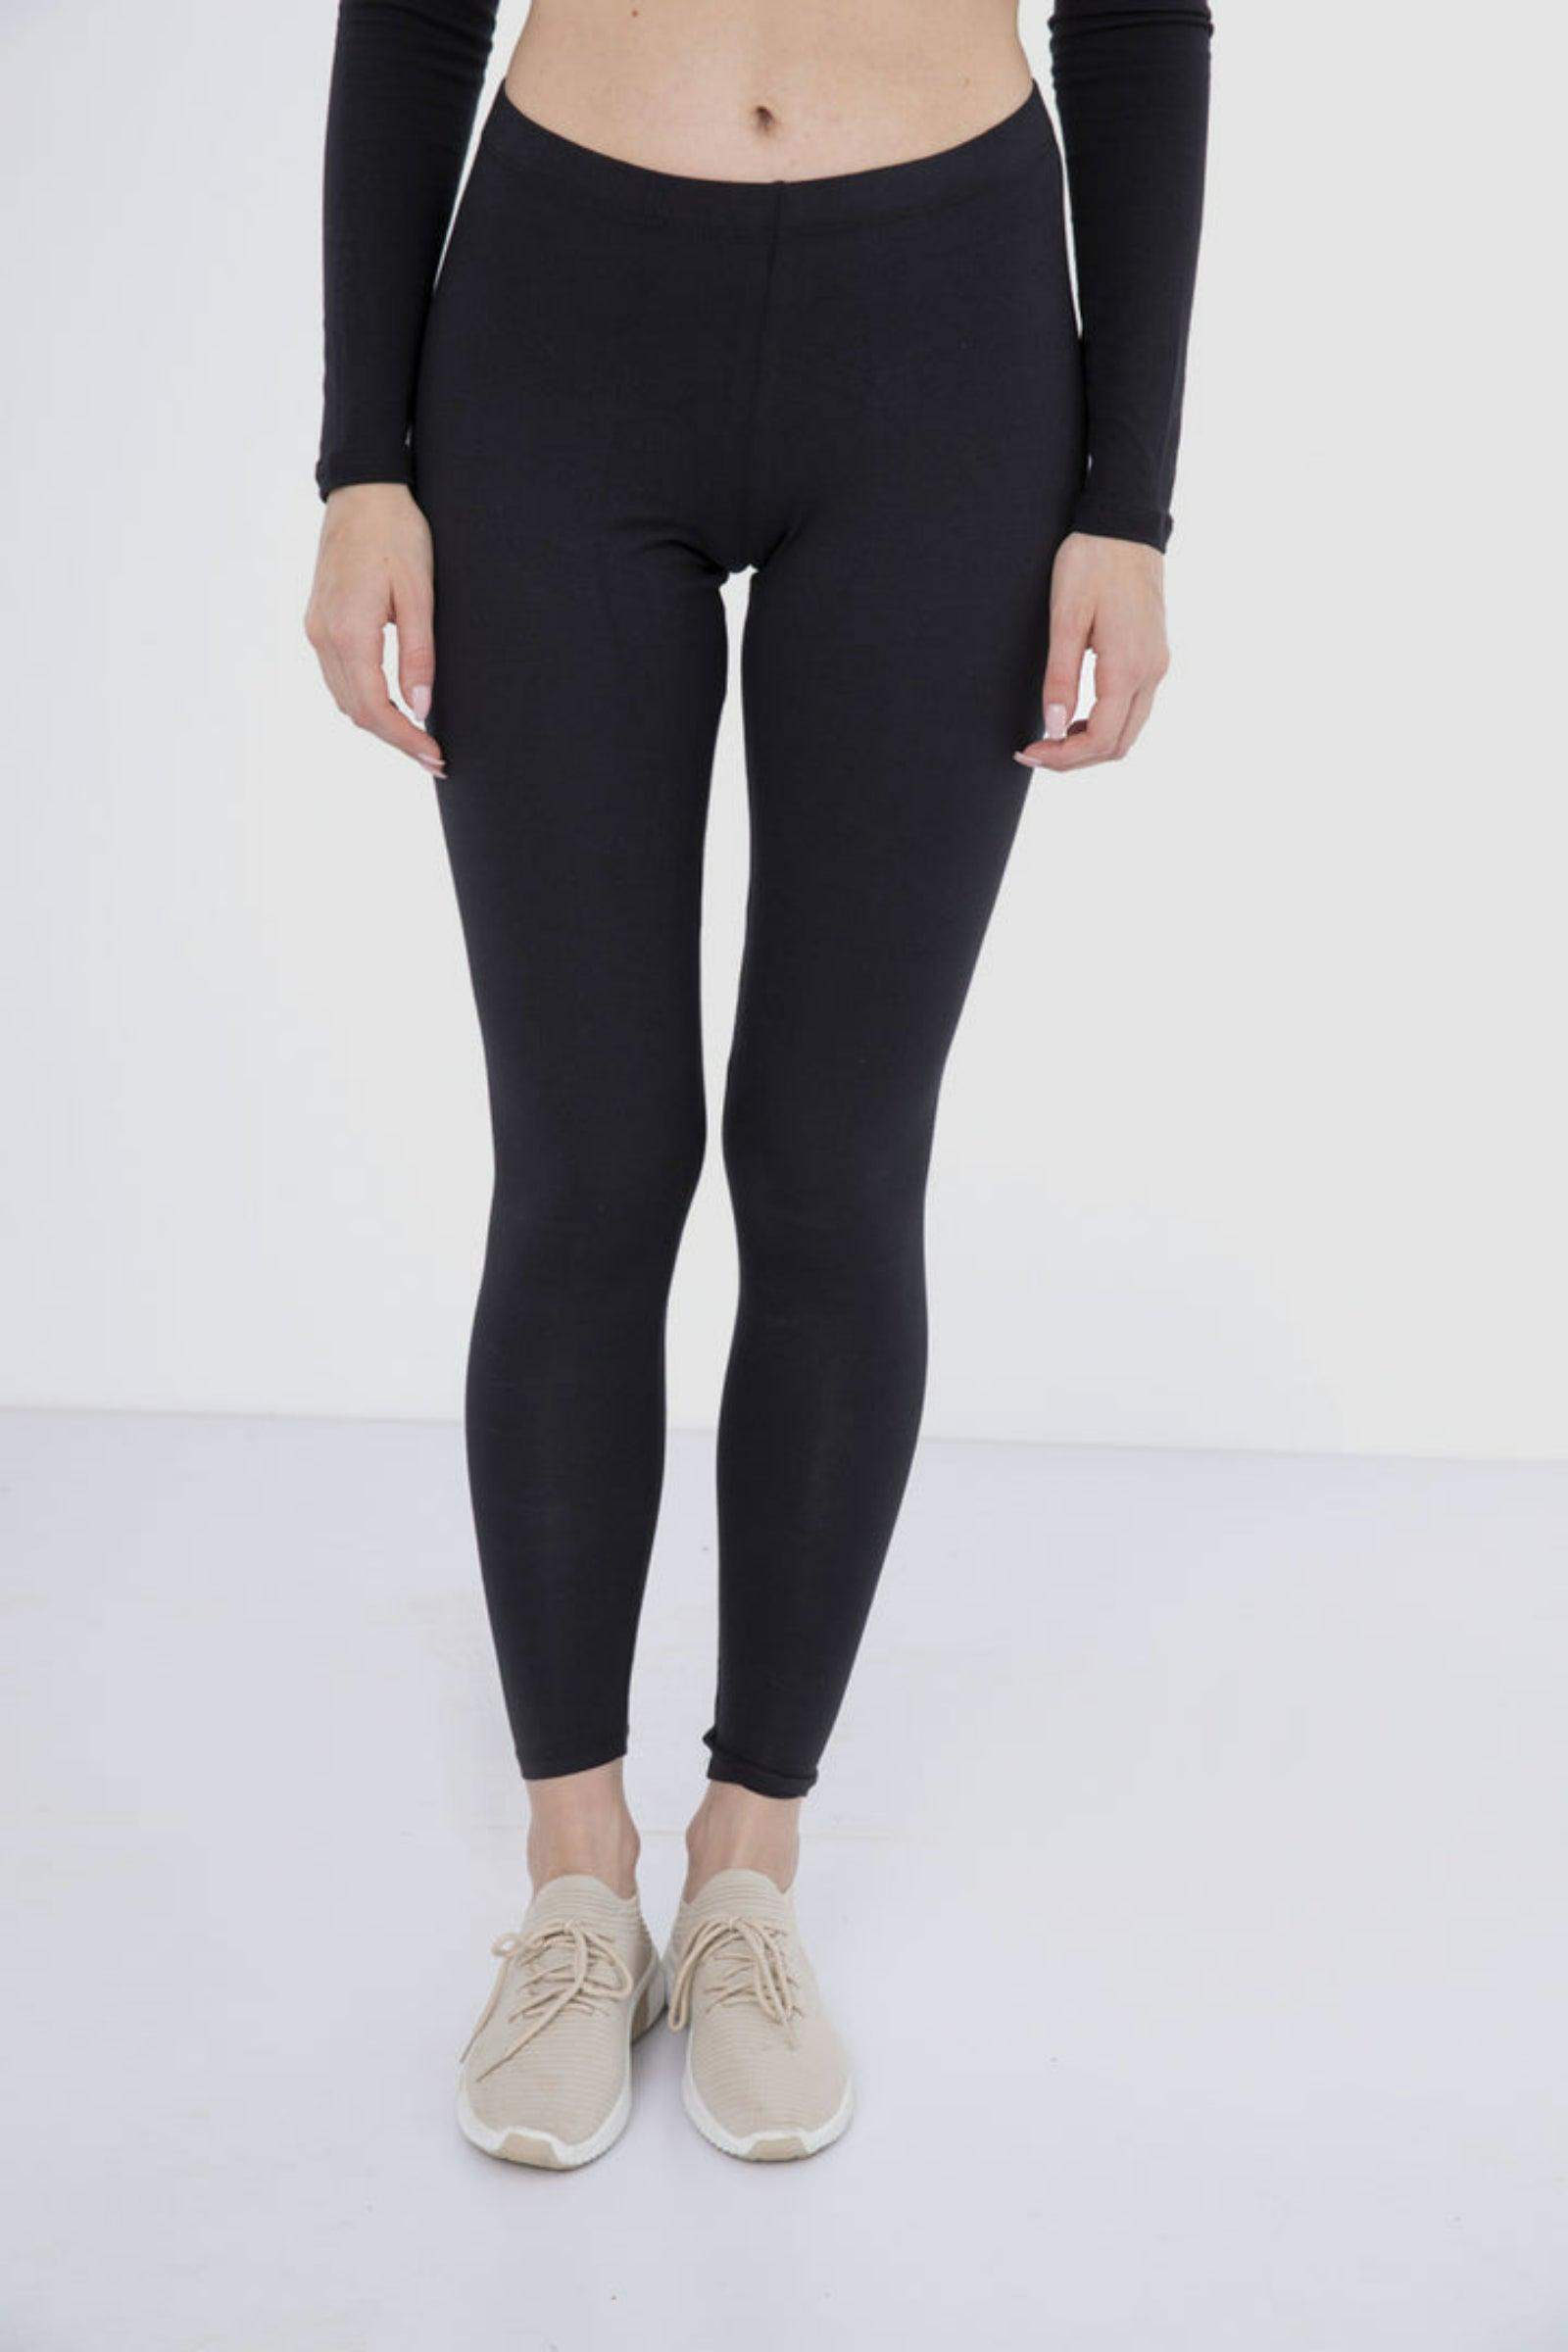 US Ladies Stretchable Skinny Women Cotton Long Legging - Size M-XL 1143600